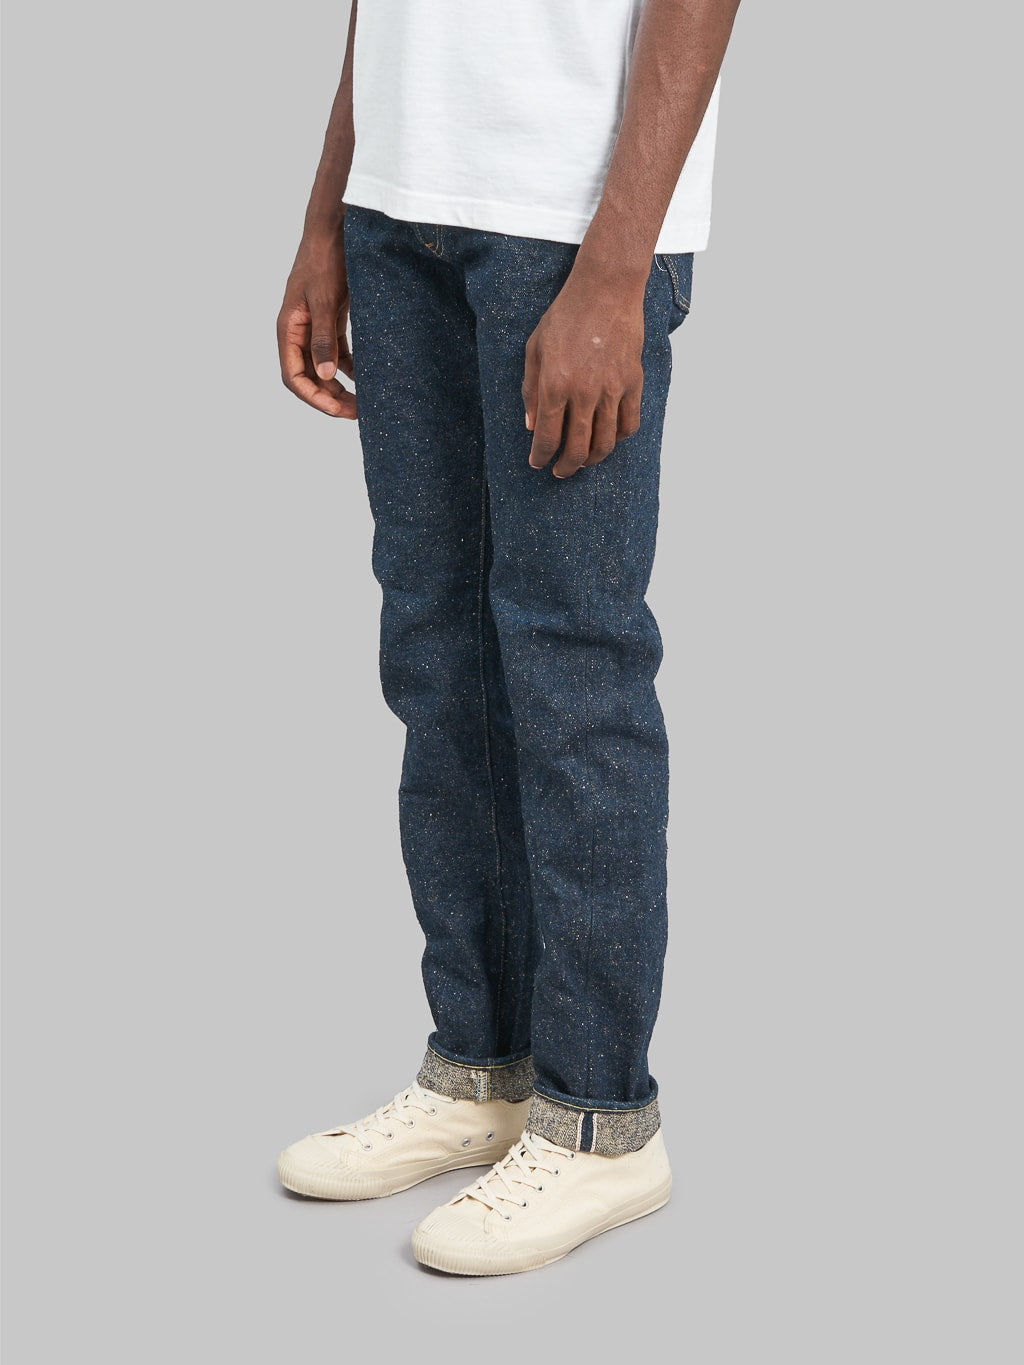 ONI Denim 246SESR Secret Super Rough Neat Straight selvedge Jeans side fit